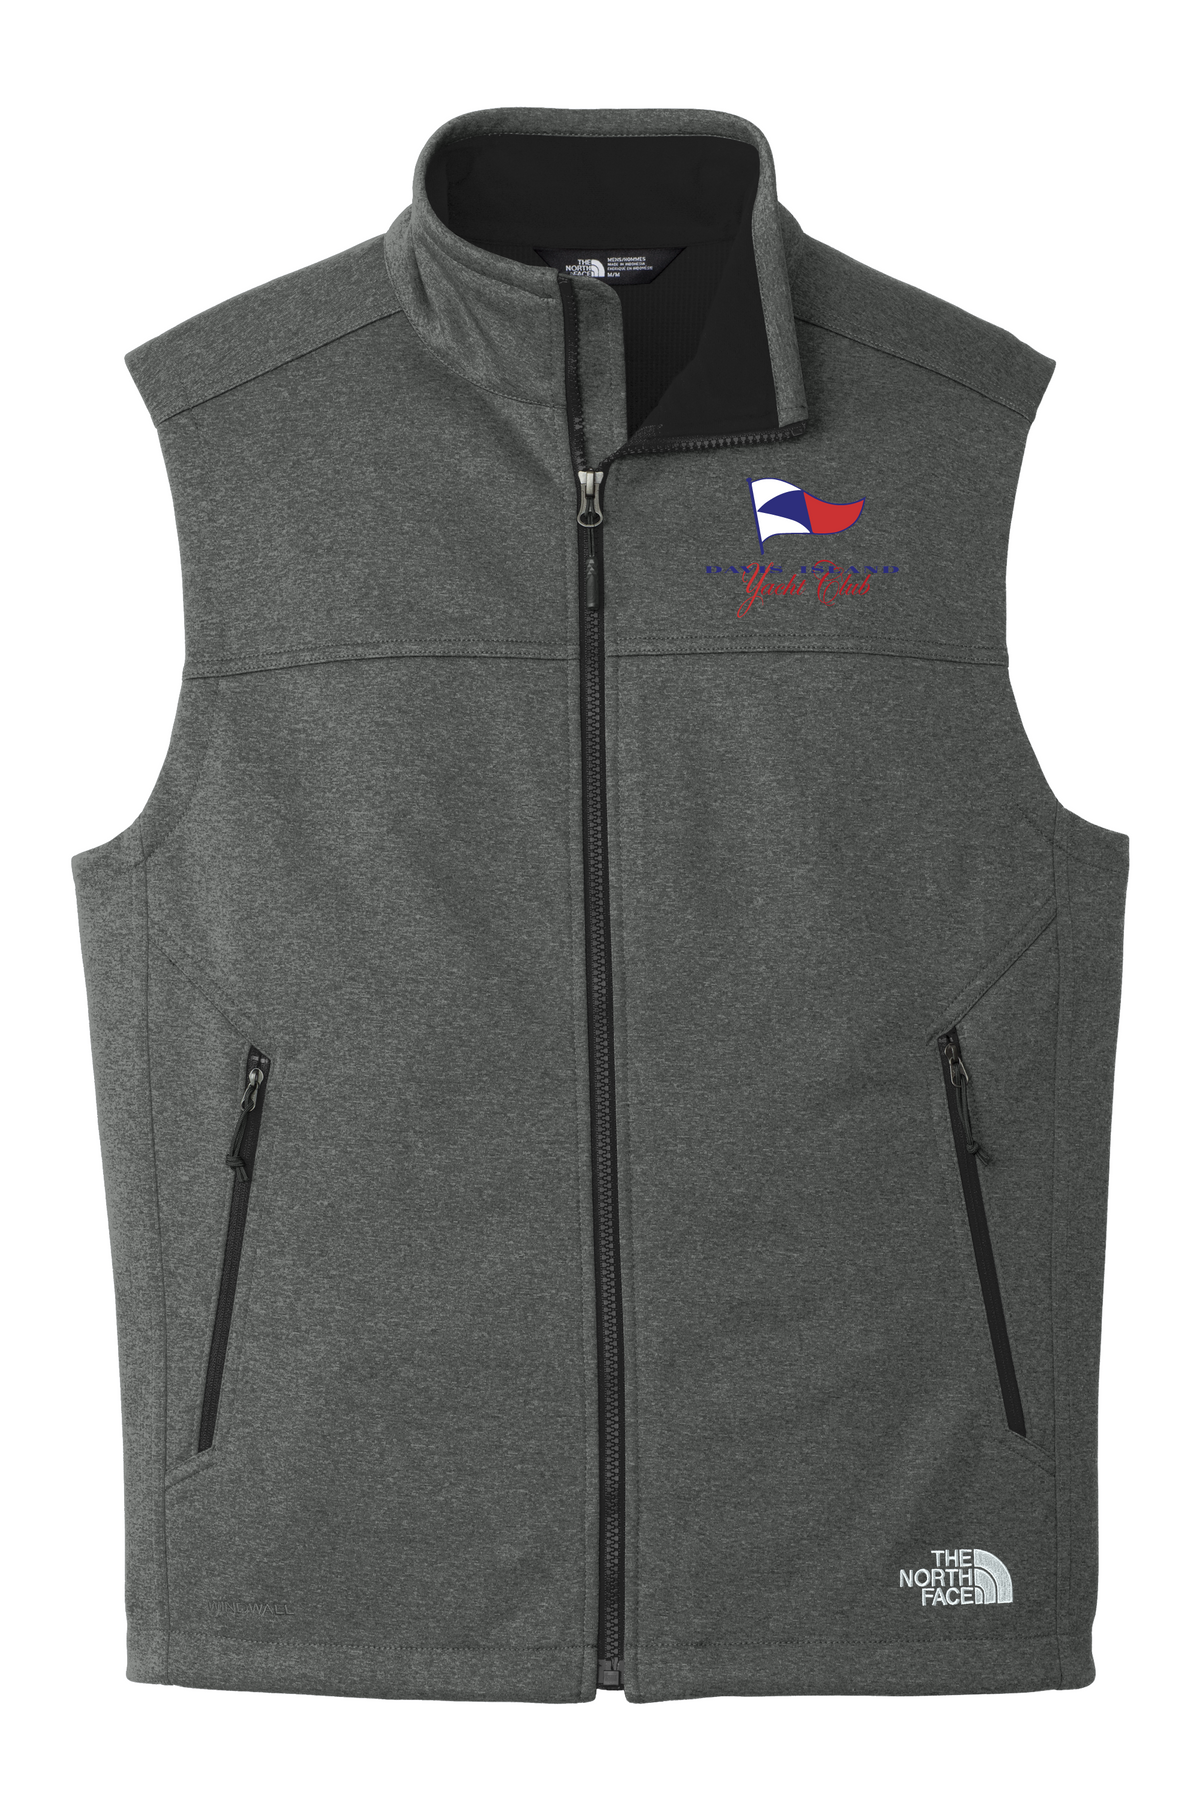 Men's DIYC The North Face® Ridgewall Soft Shell Vest